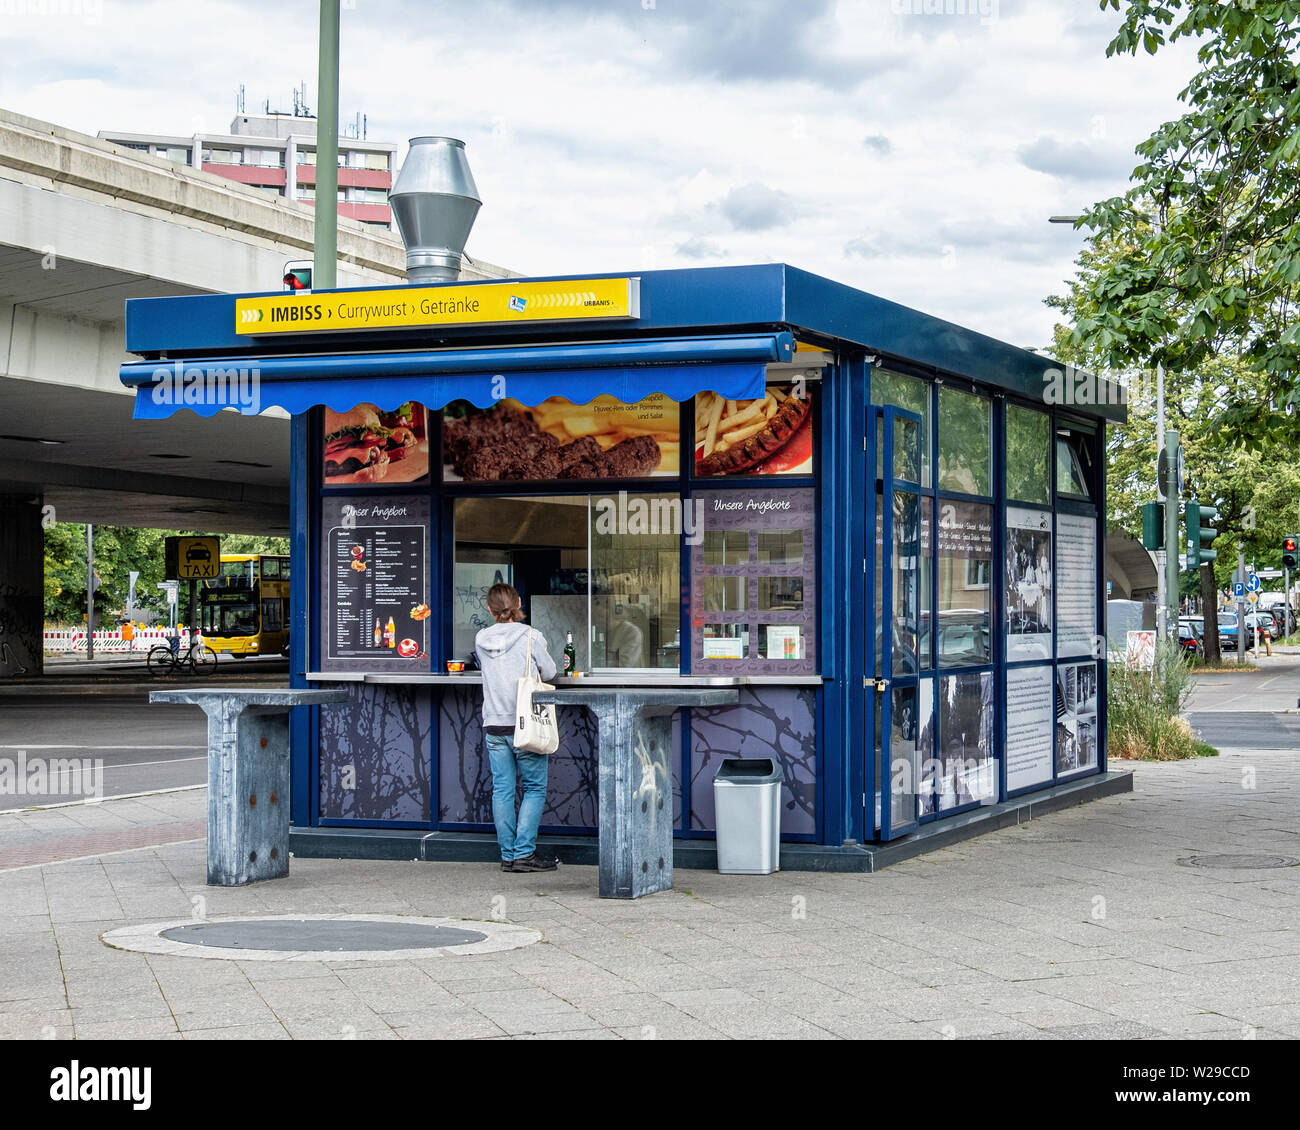 Imbiss - fast food chiosco vendita di fast food, currywurst & bevande su Breitenbachplatz, Dahlem, Berlino Foto Stock